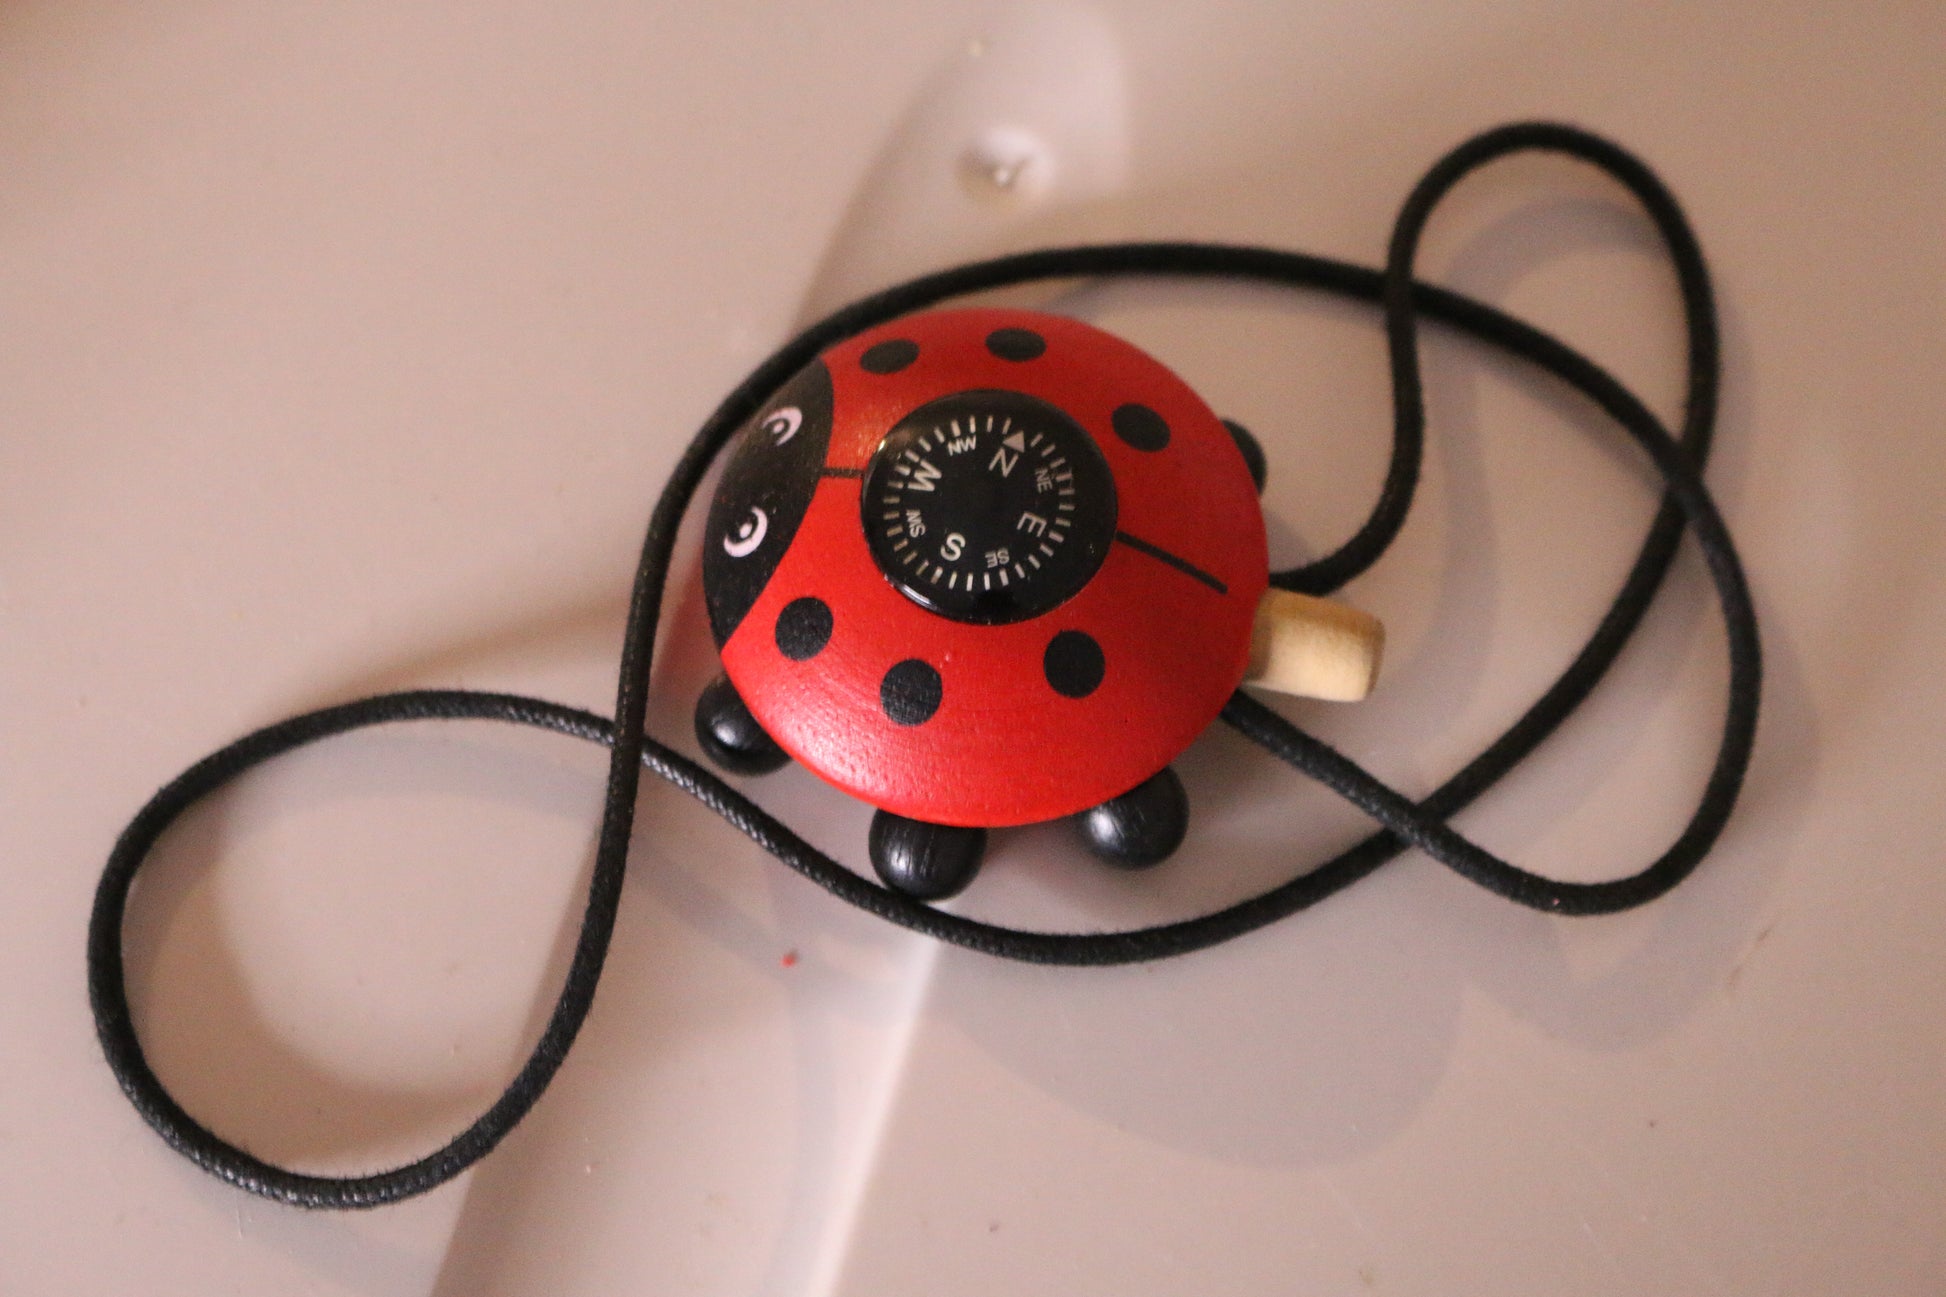 5 DIYS of Miraculous Ladybug (Mask, Yo-yo, Fidget Spinner